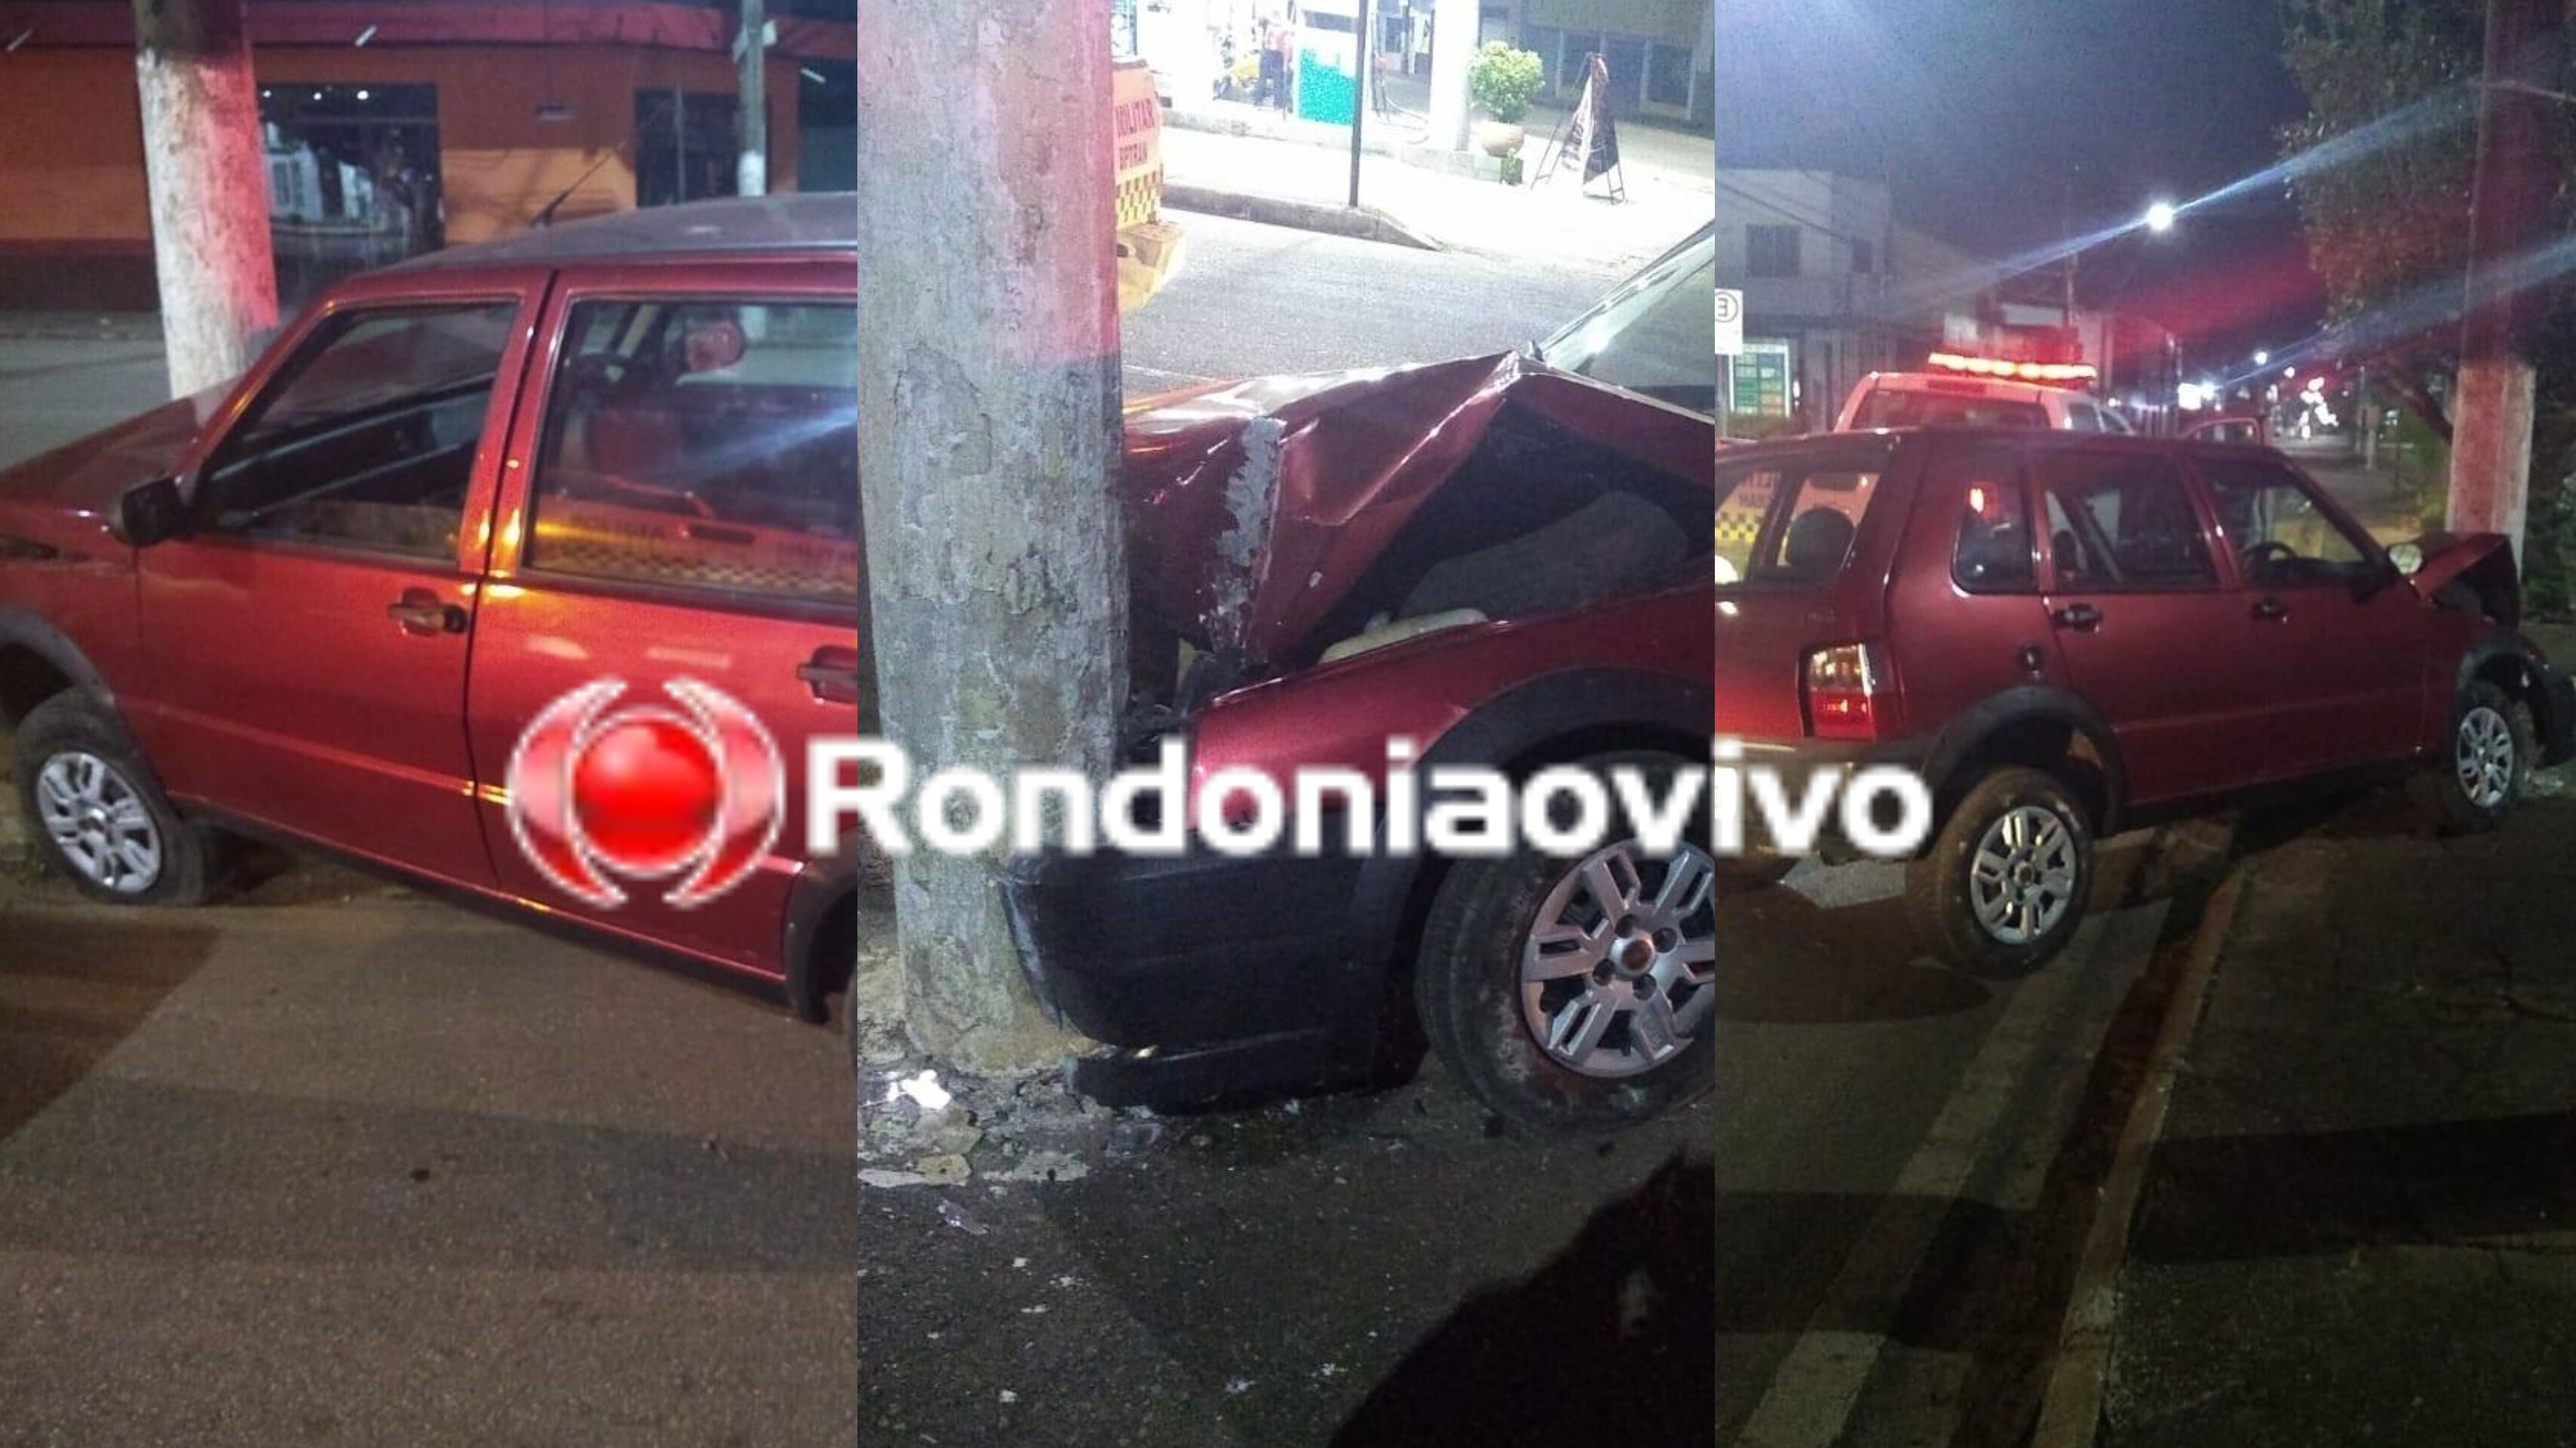 ESTADO GRAVE: Idoso de 68 anos fica desacordado após colidir carro contra poste na capital 